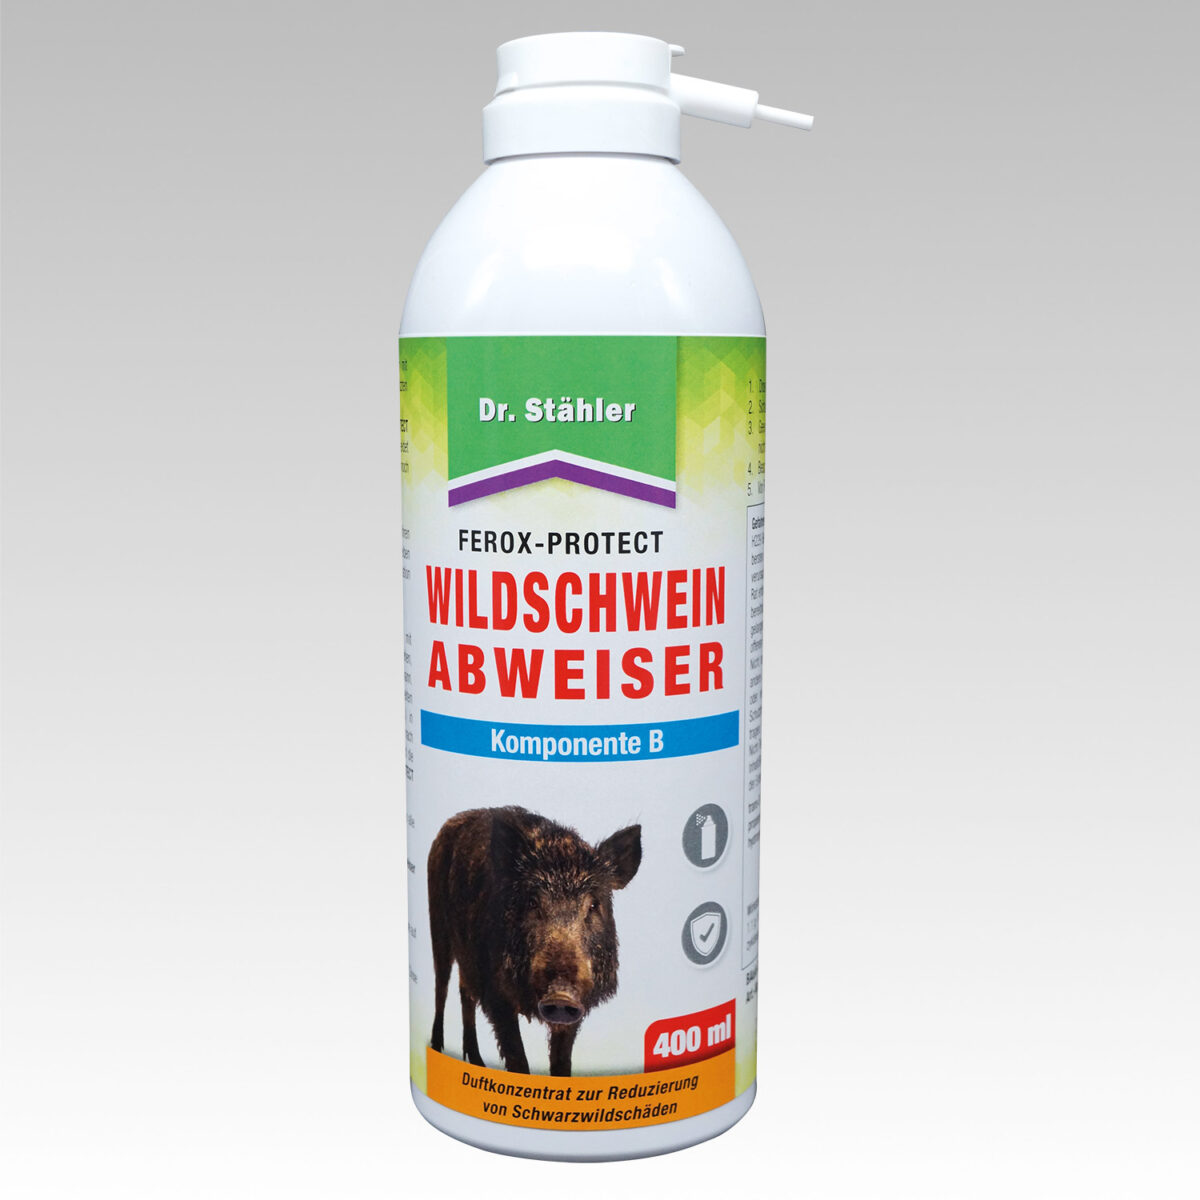 6191 Ferox Protect Wildschwein Abweiser Komp B 400ml